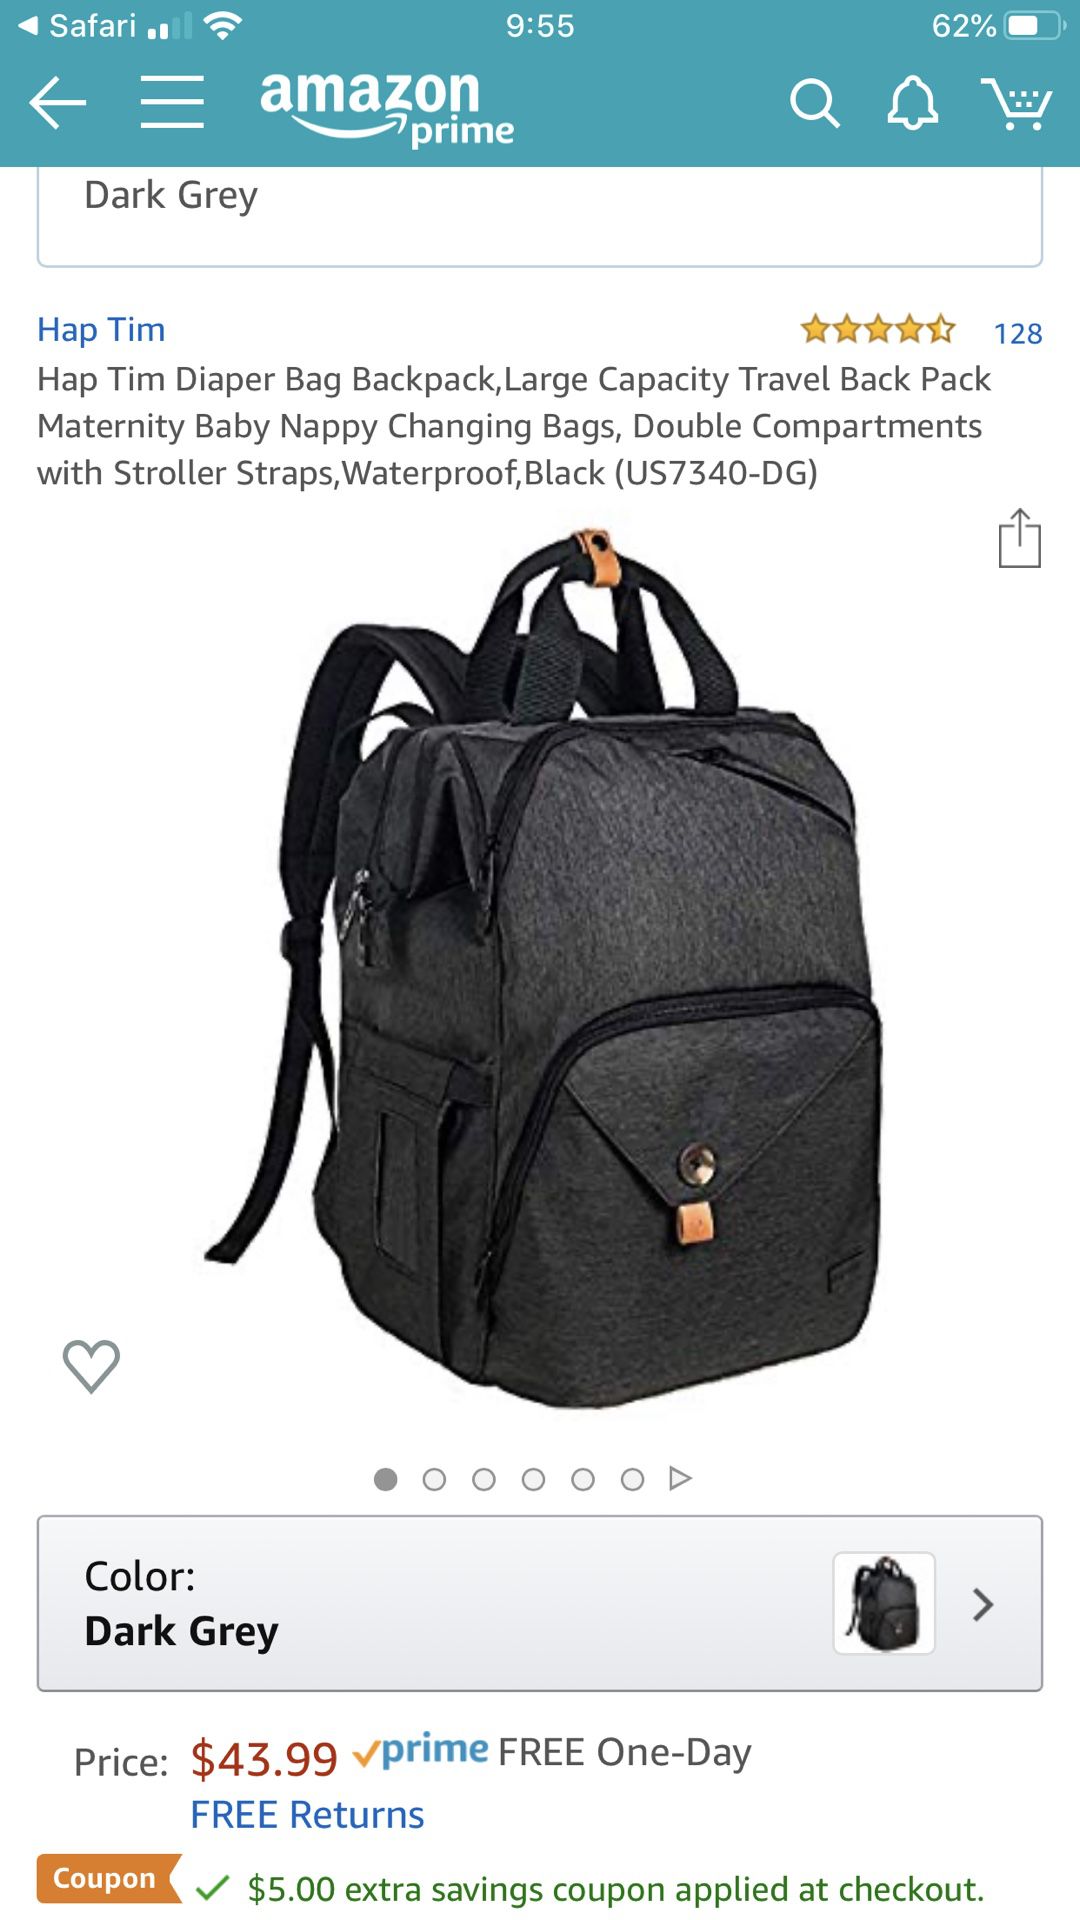 Almost NEW Hap Tim Diaper Bag Backpack,Large Capacity Travel Back Pack